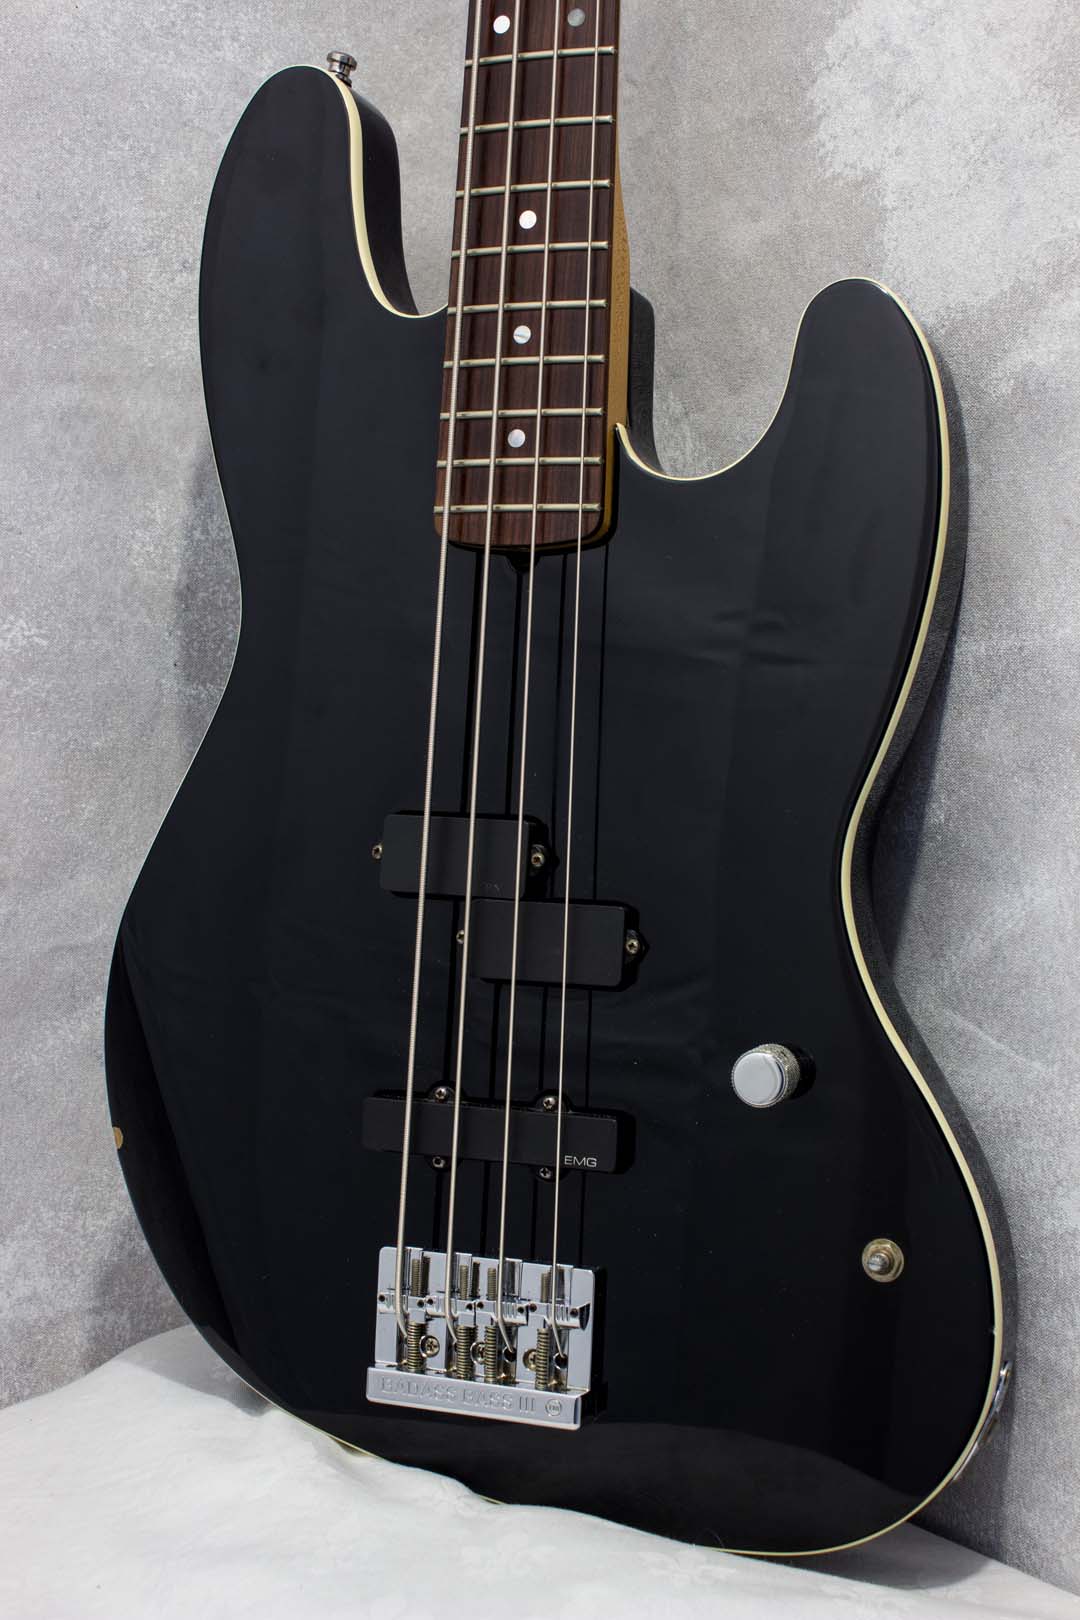 Frank Bello Signature Bass Black – Topshelf Instruments